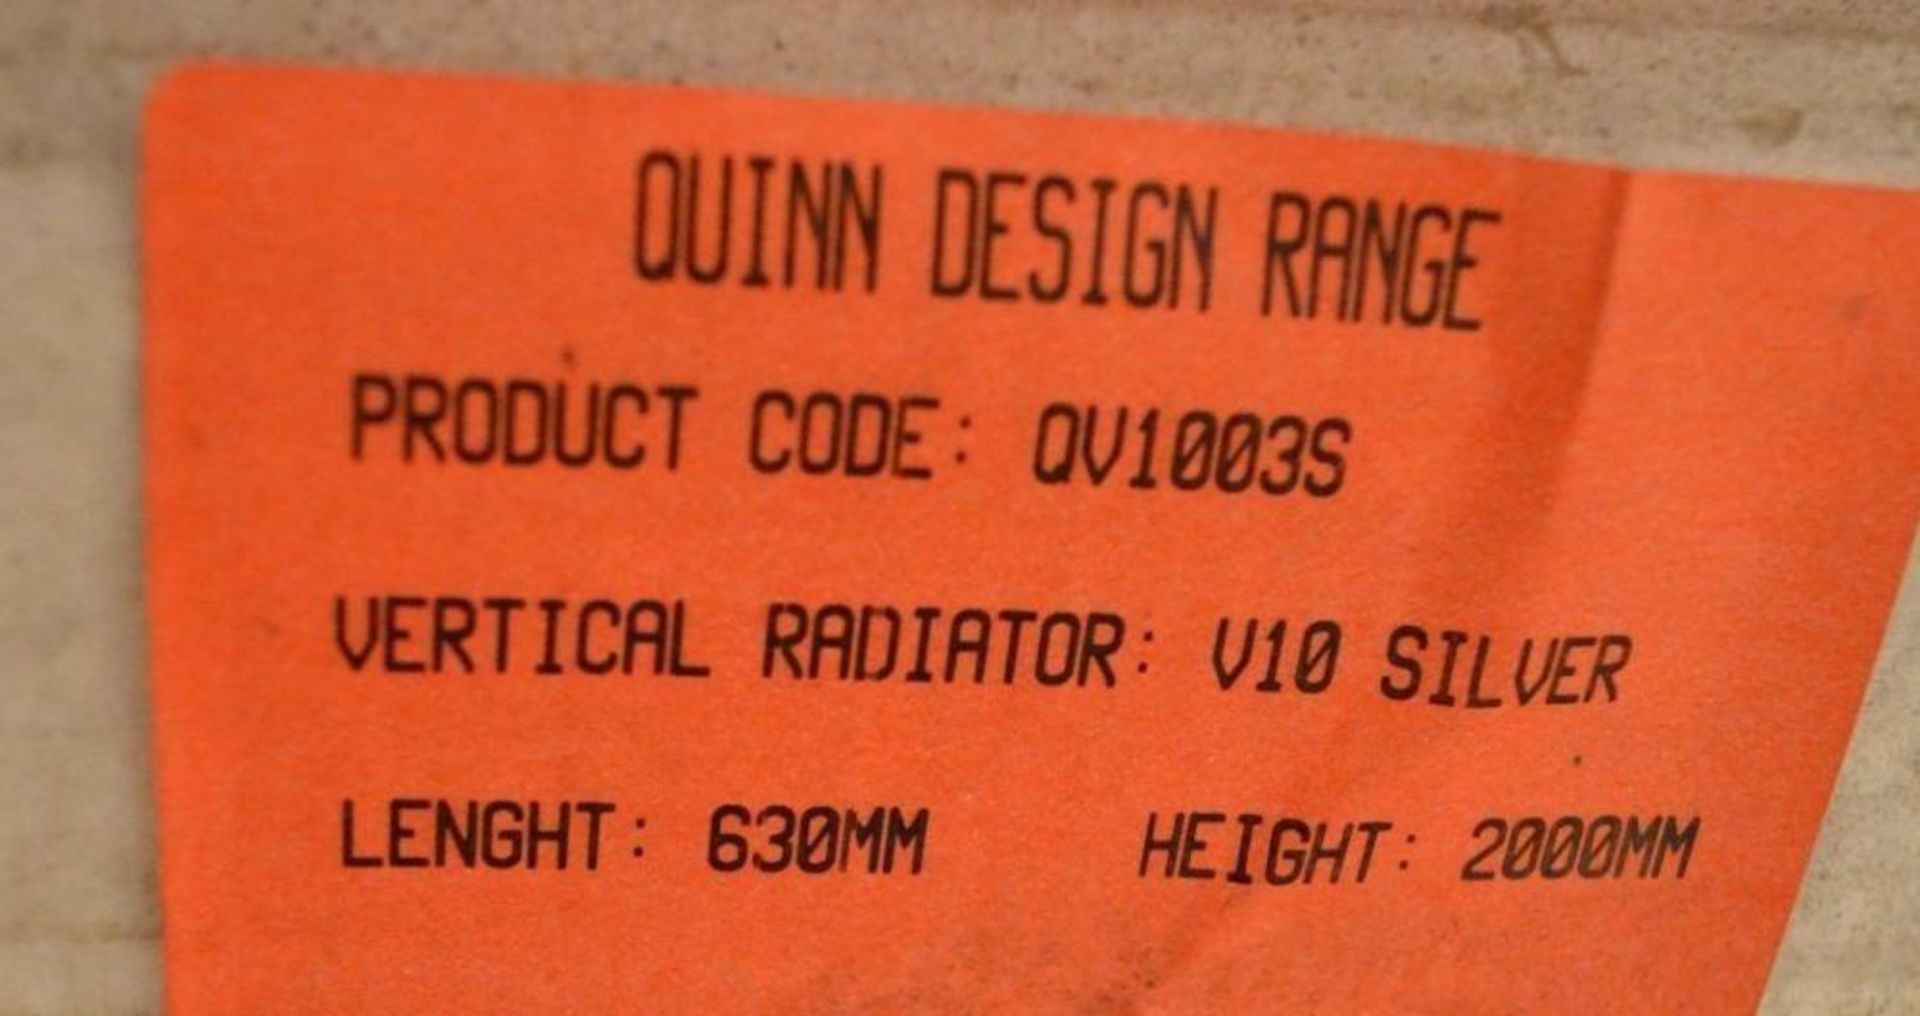 1 x Quinn Slieve Designer Single Panel Vertical Radiator in Matt Silver - Contemporary Design - Will - Image 5 of 5